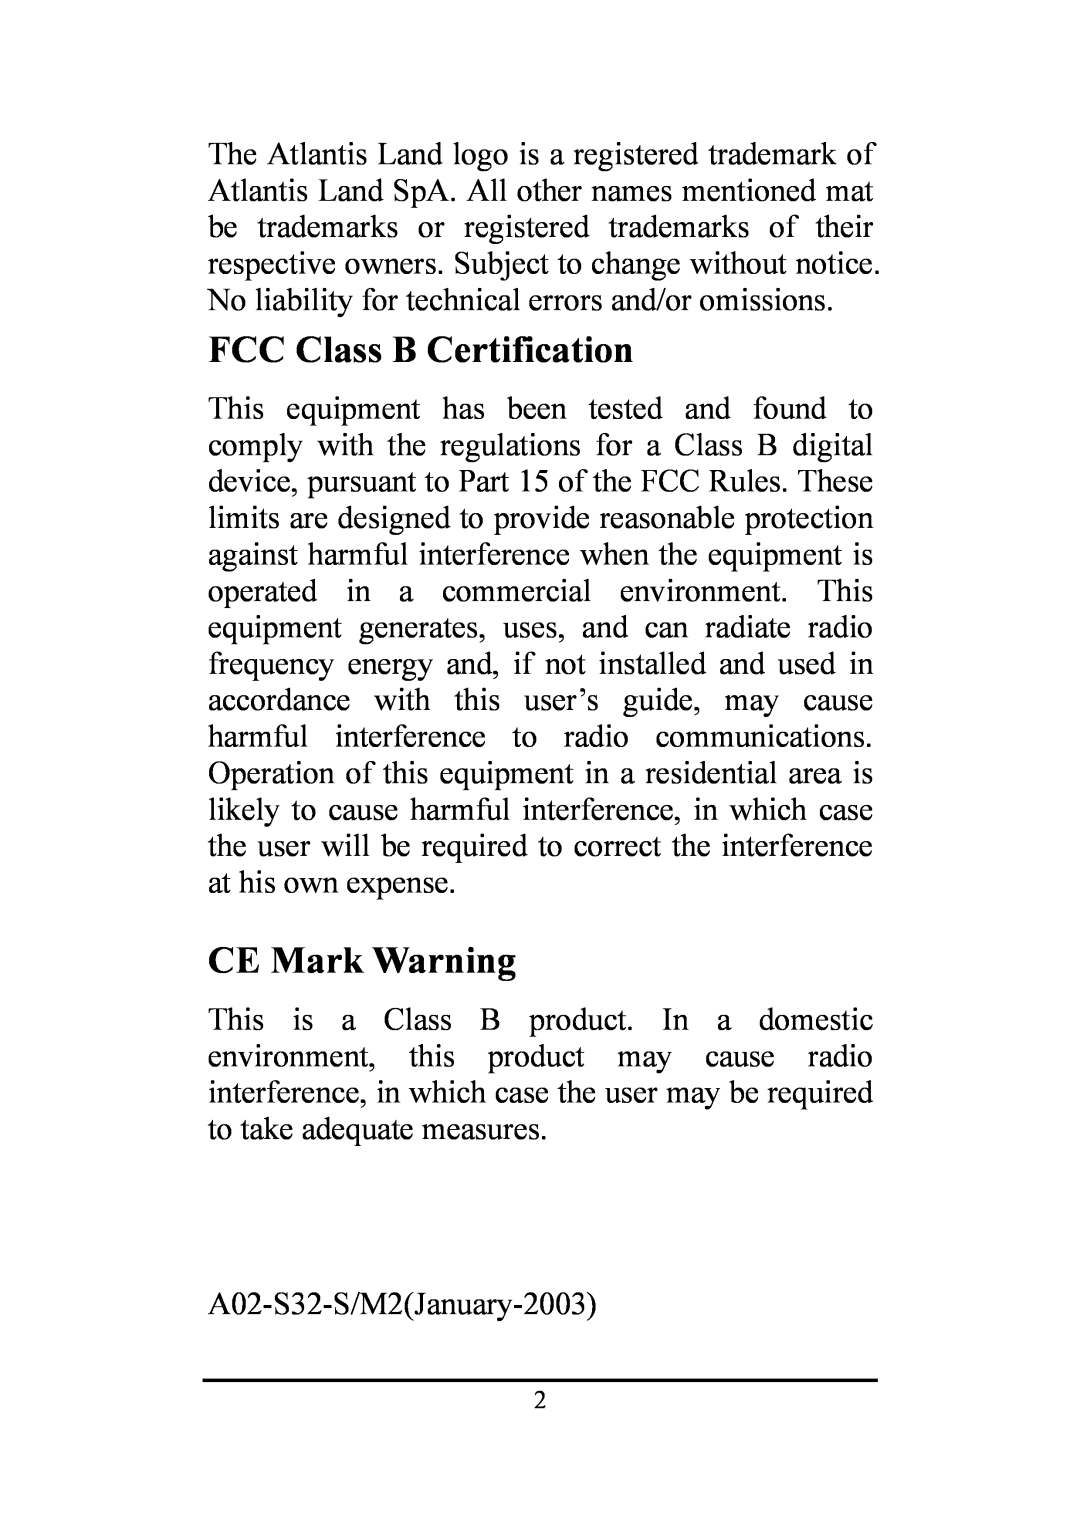 Atlantis Land A02-S32-S/M2 manual FCC Class B Certification, CE Mark Warning 